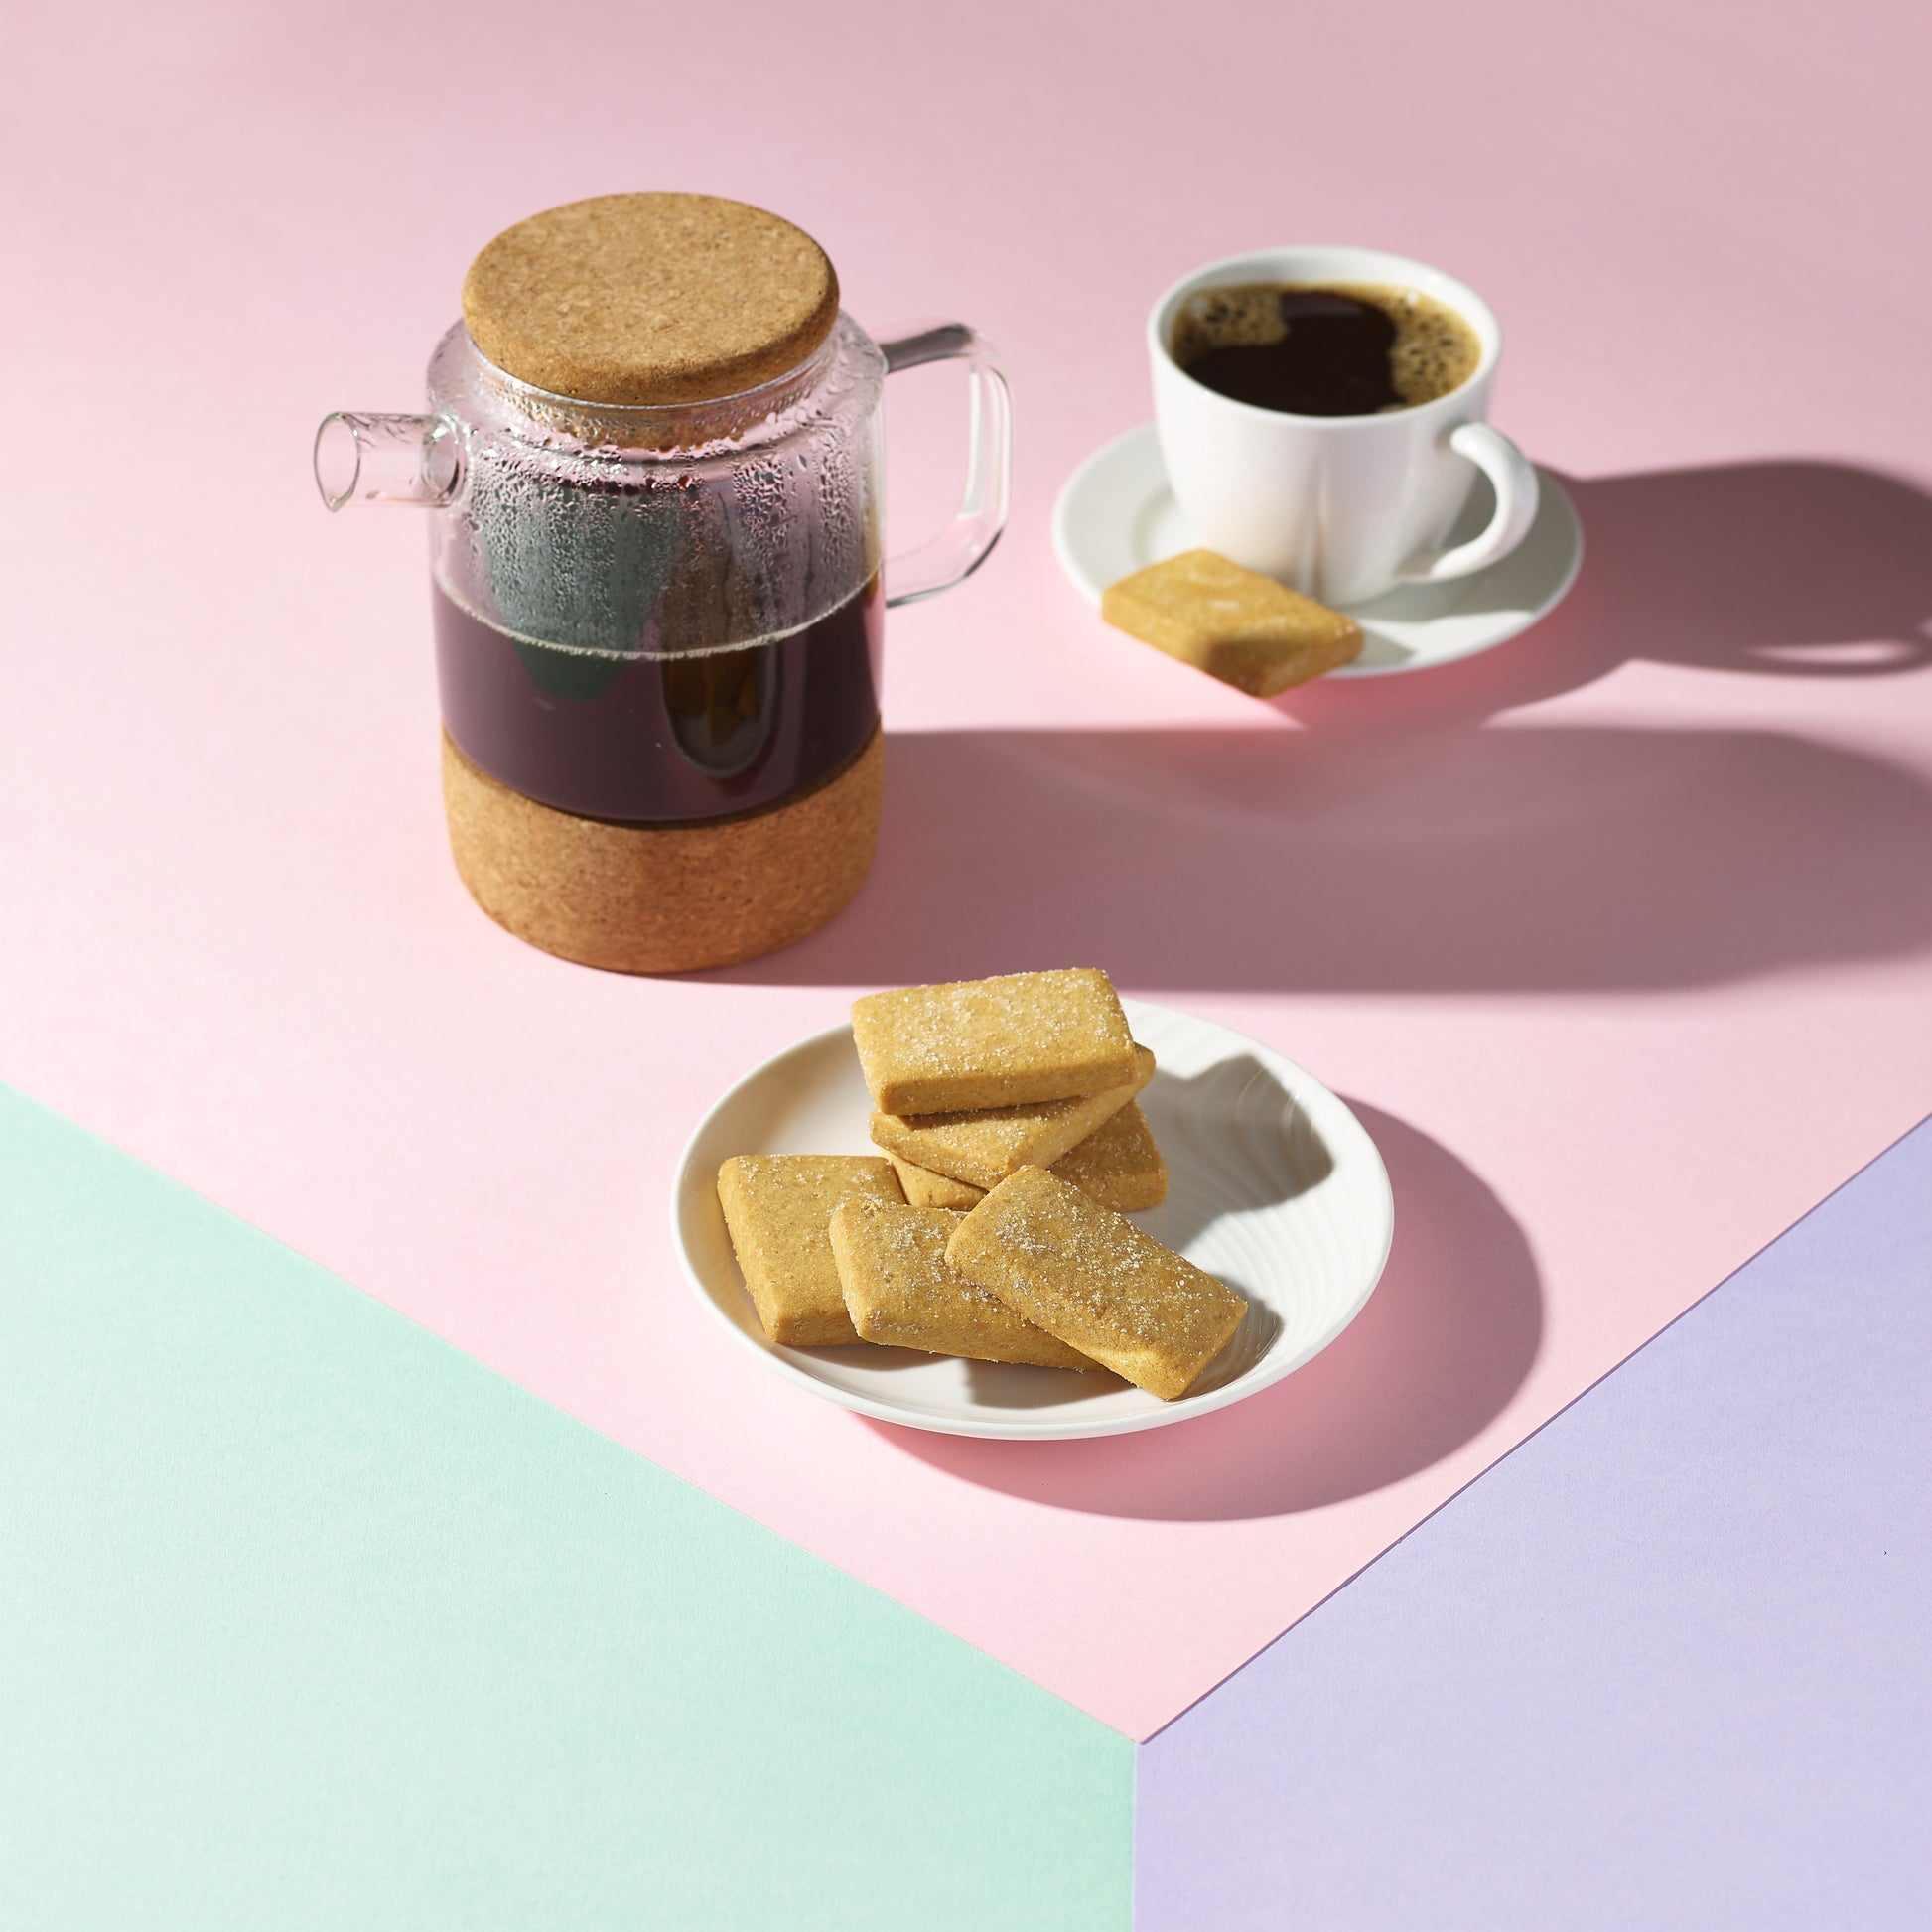 plain shortbread on plate with coffee jug and mug